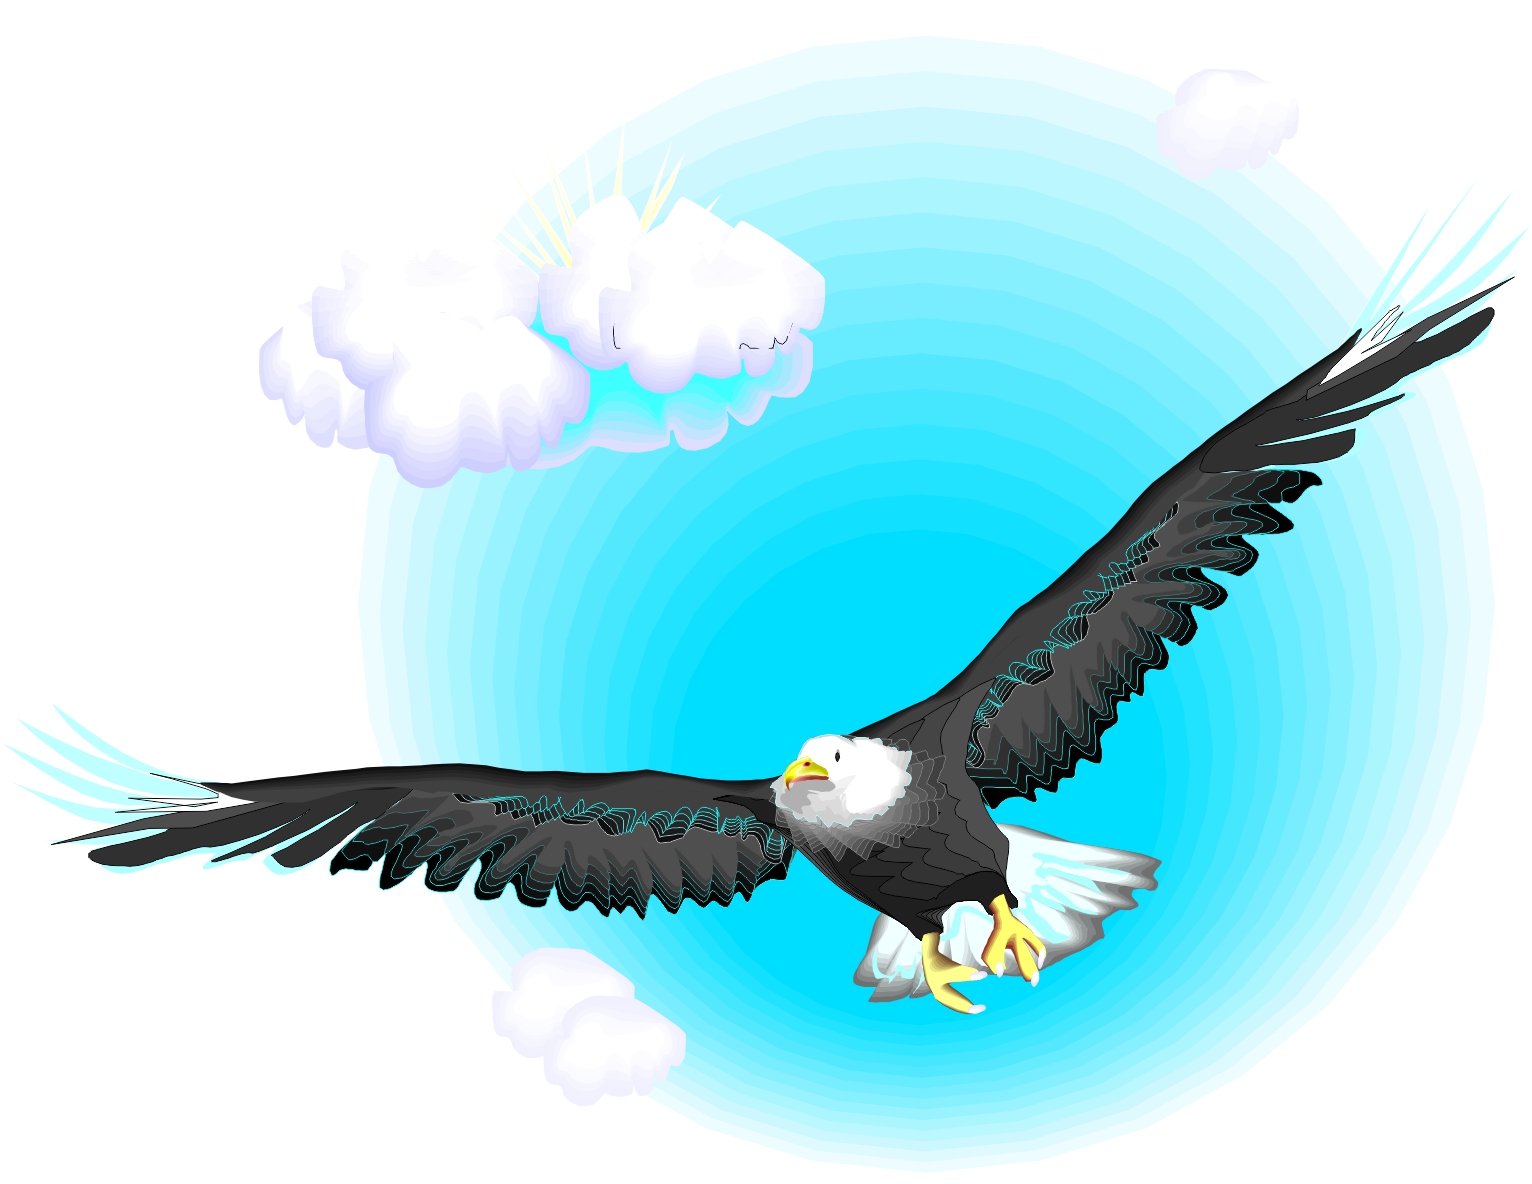 happy cartoon eagle flying